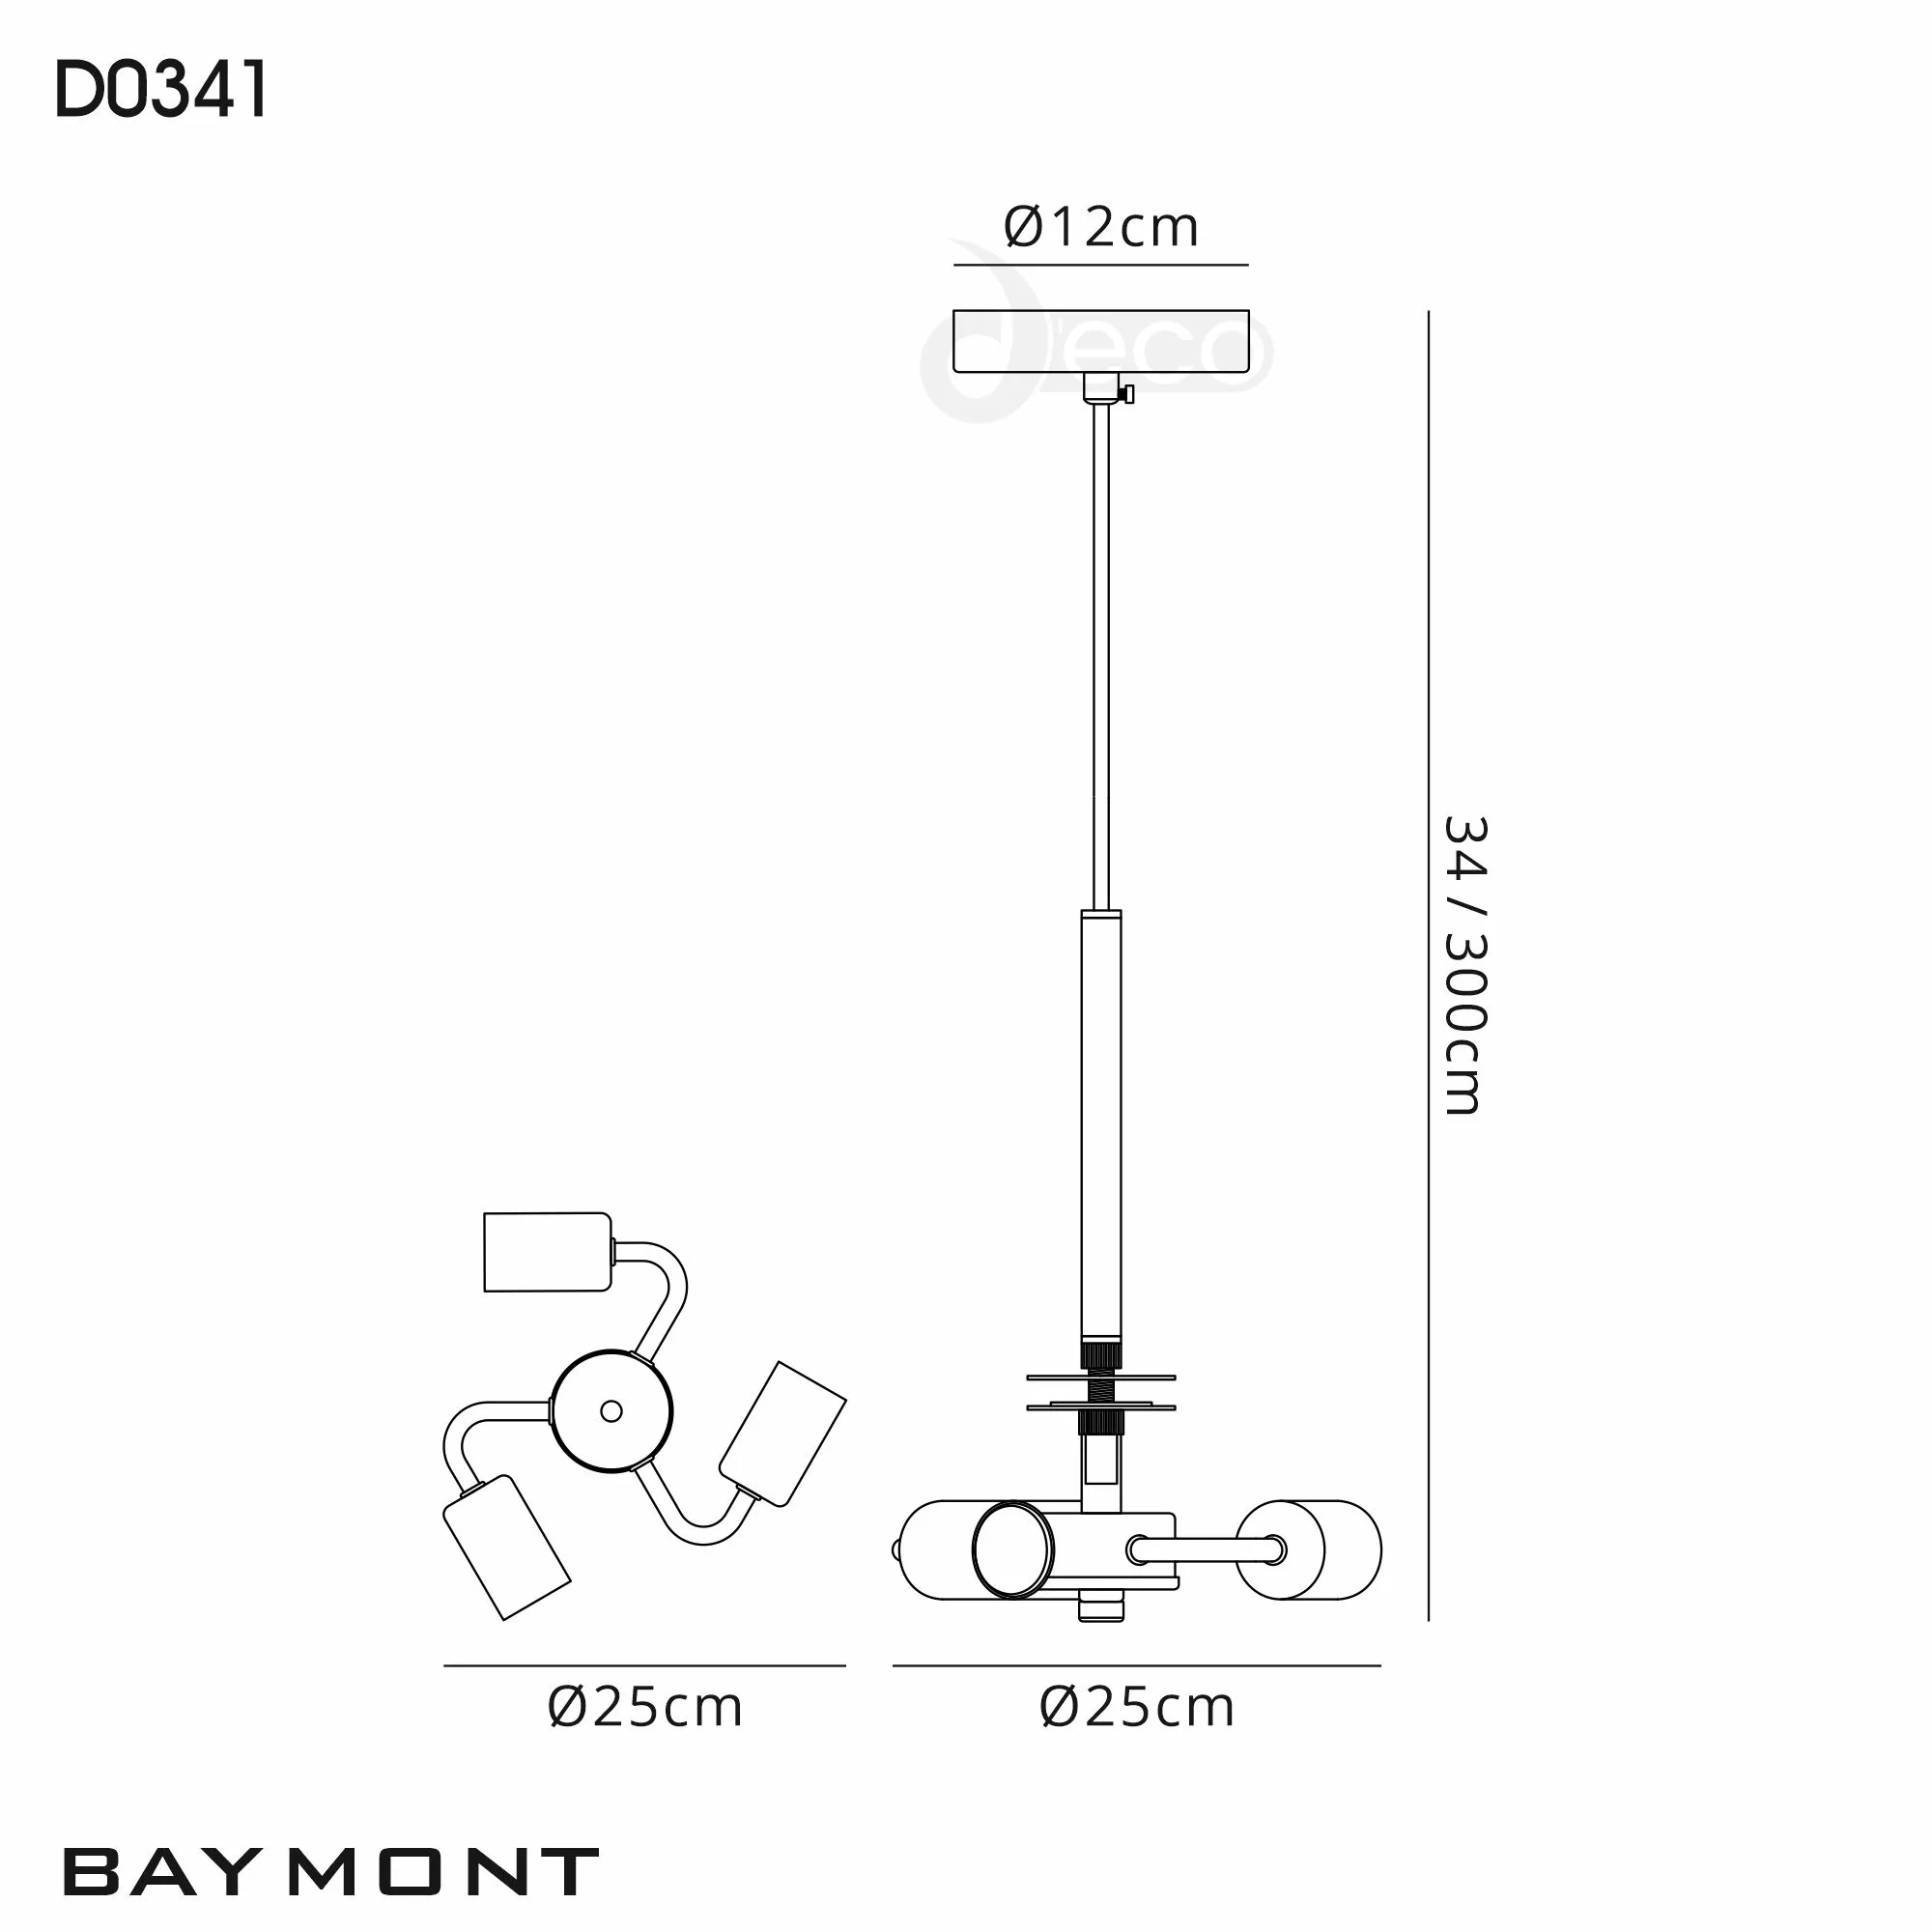 Baymont 45cm 3 Light Pendant Satin Nickel; White DK0721  Deco Baymont SN WH